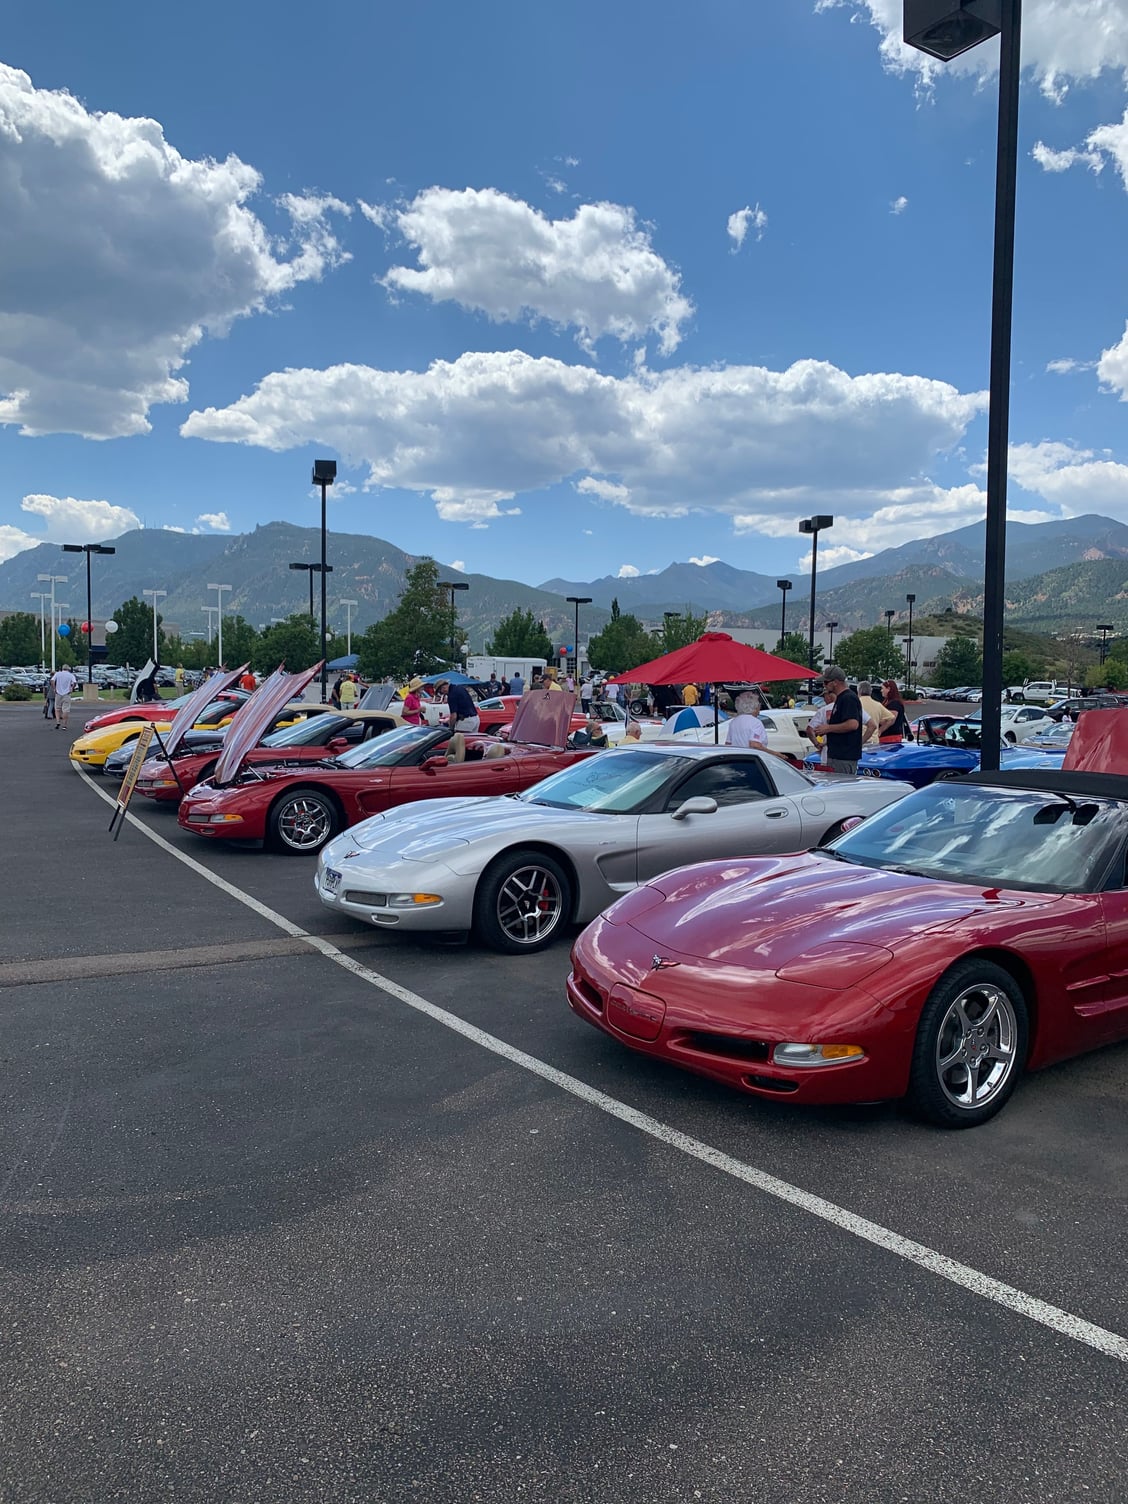 People’s choice Corvette car show in Colorado Springs CorvetteForum